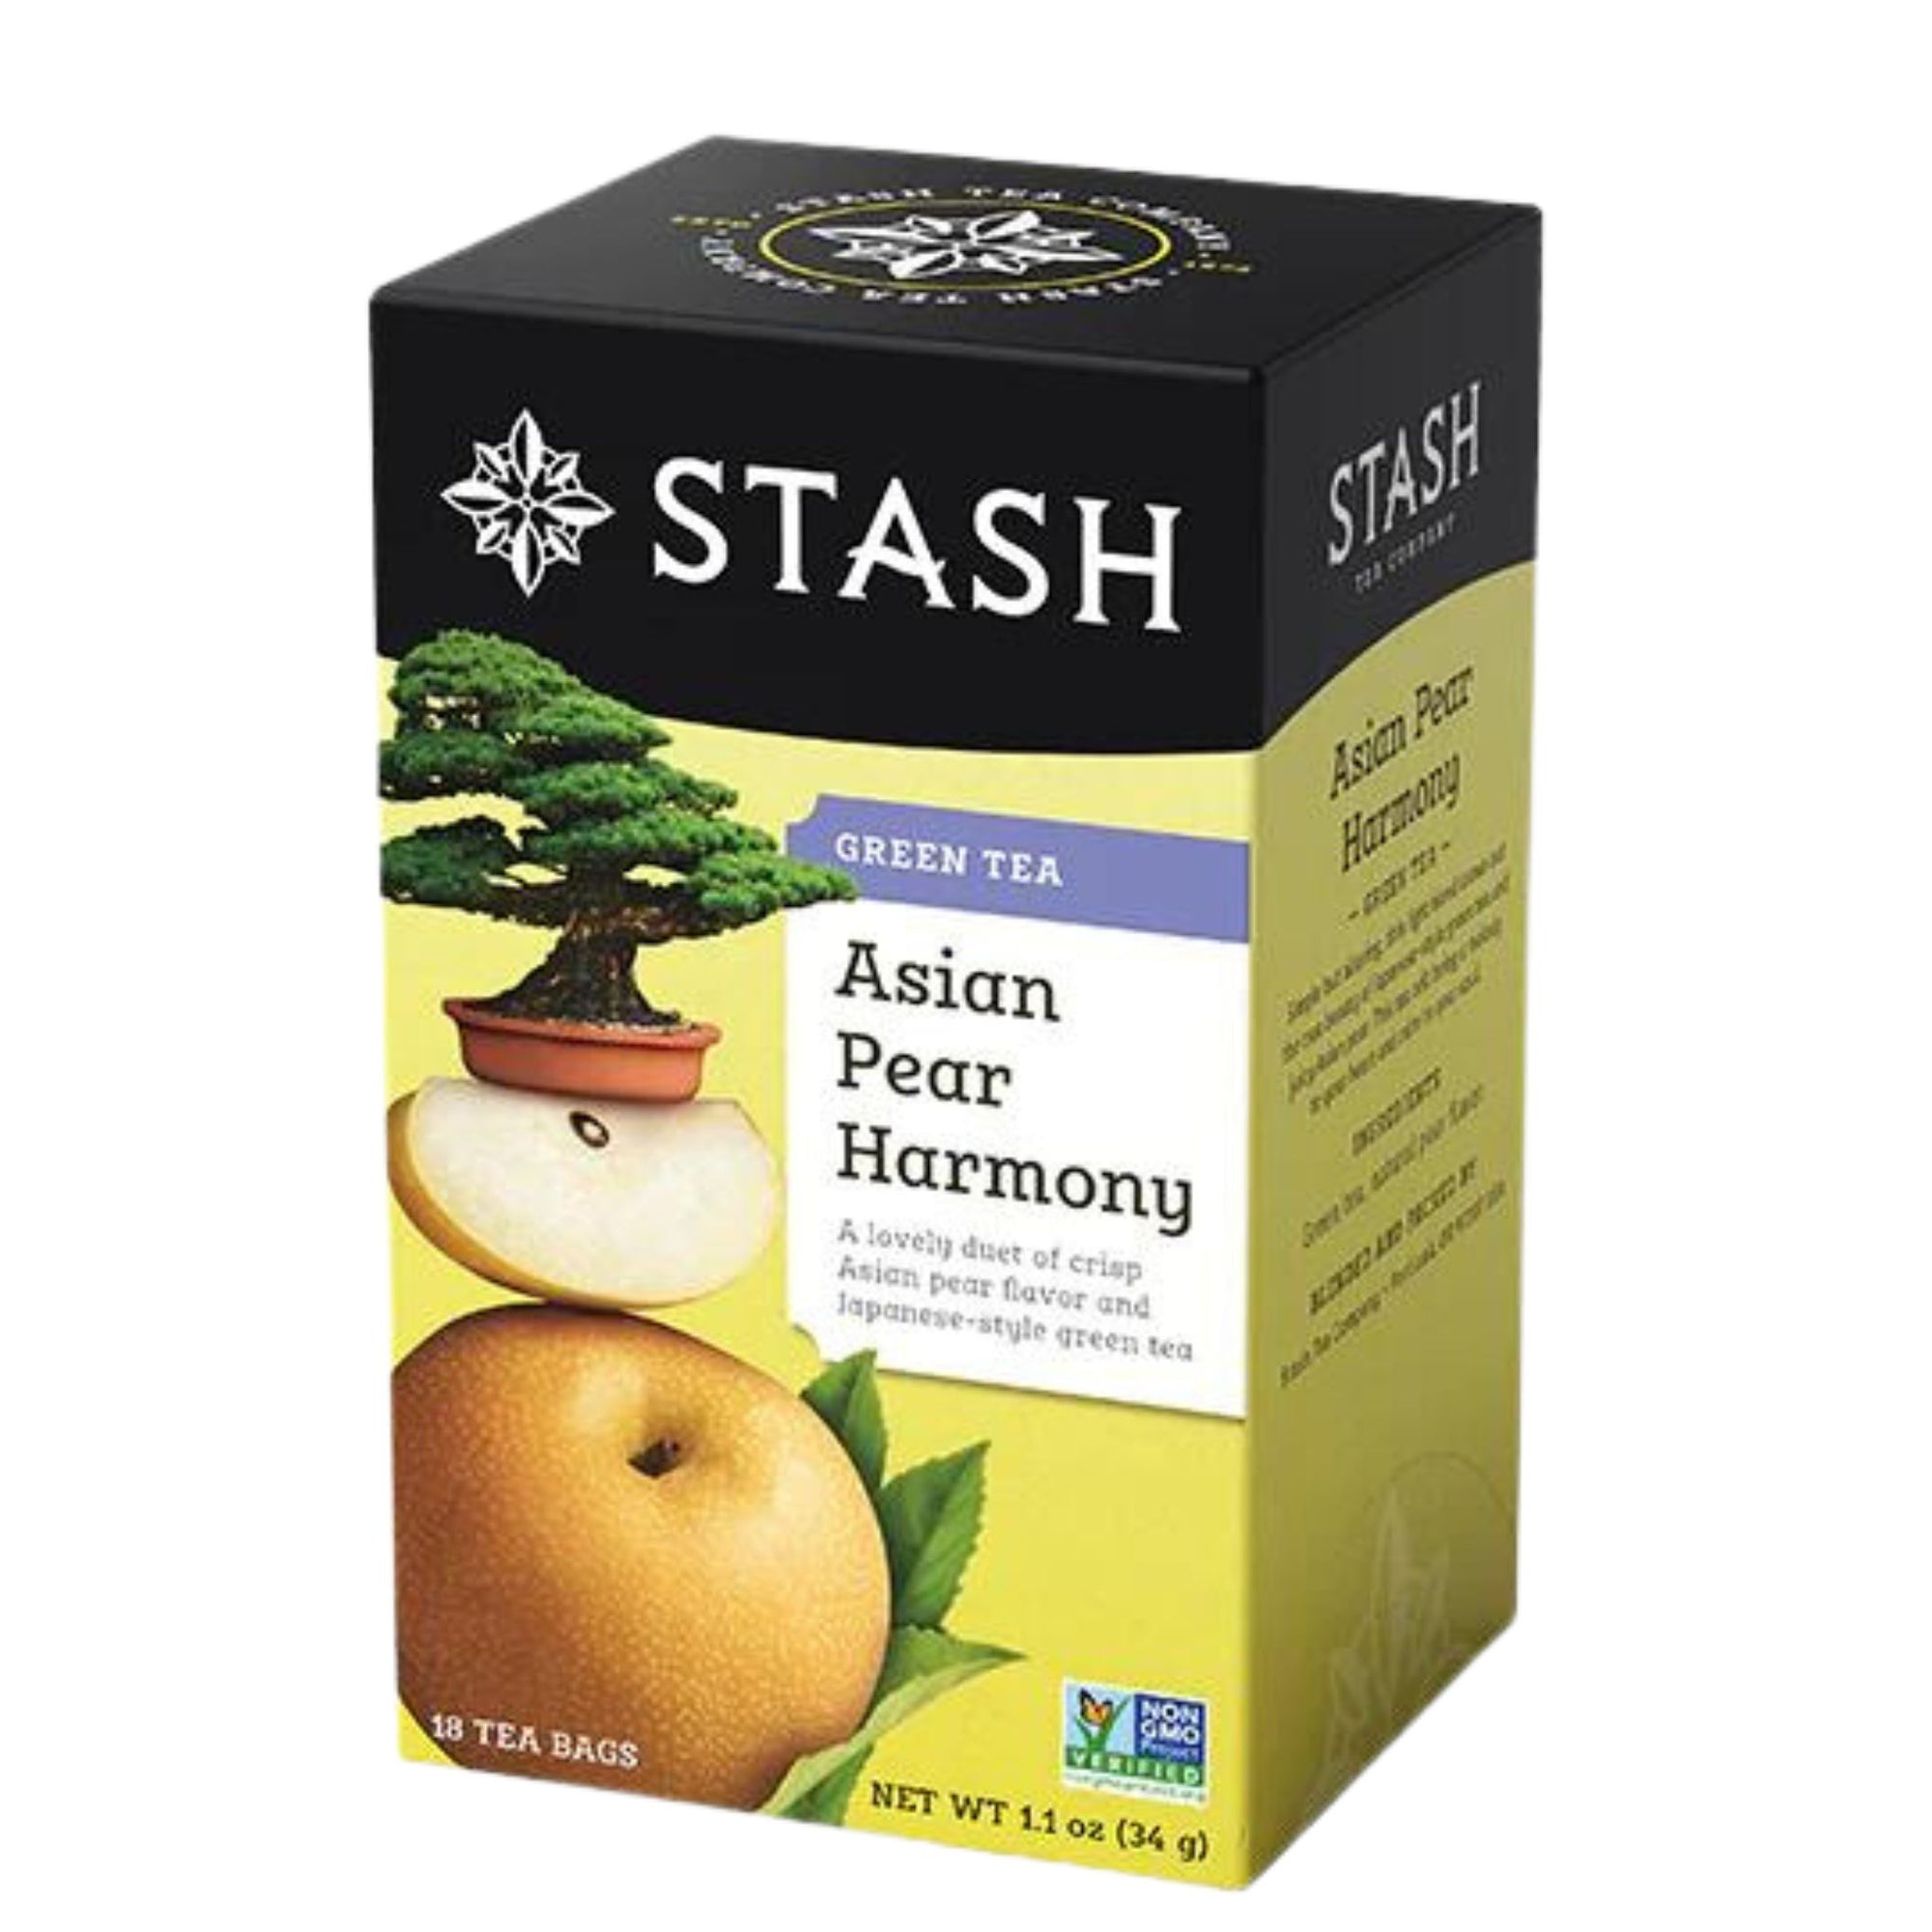 Stash Asian Pear Harmony Green Tea - 18 tea bags in a box - A lovely duet of crisp Asian pear flavour and Japanese-style green tea. 